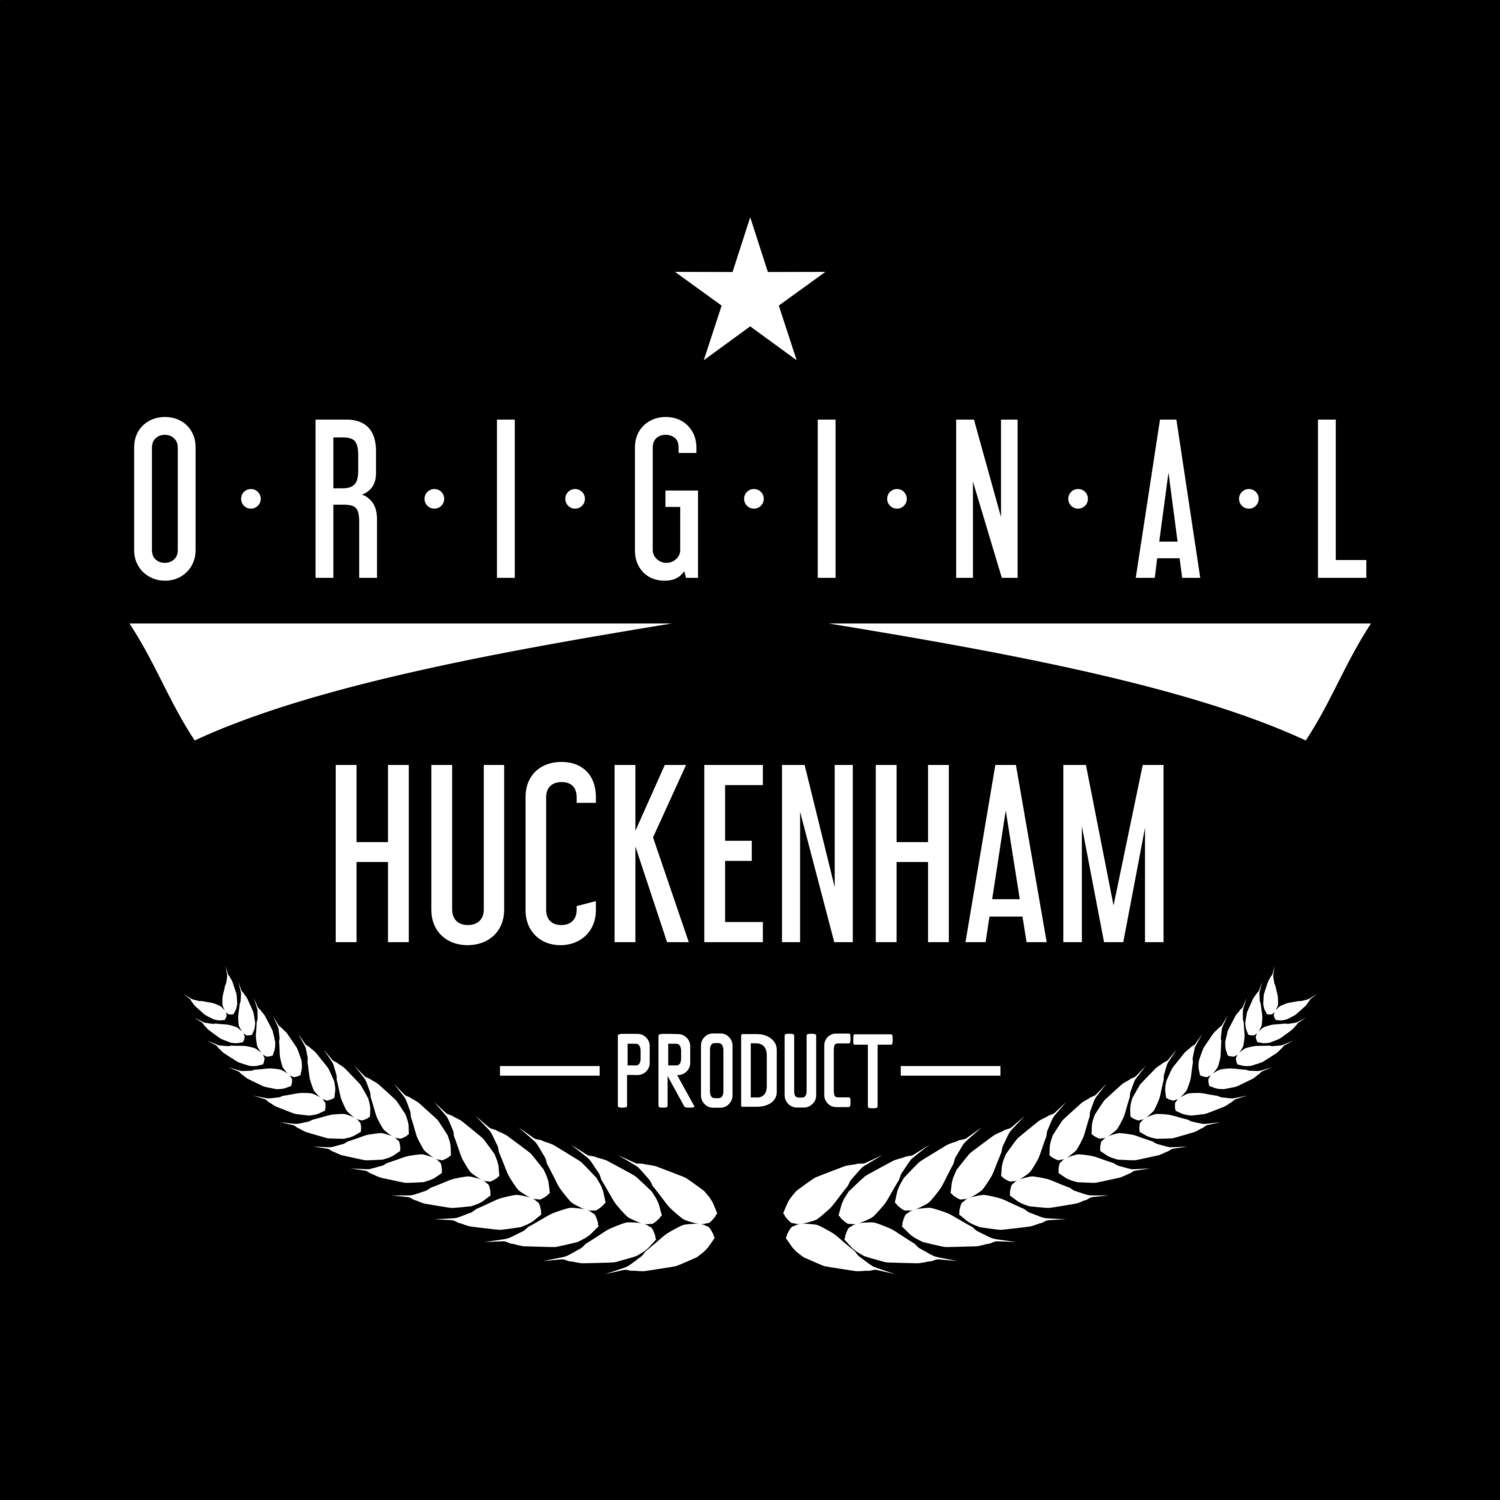 Huckenham T-Shirt »Original Product«